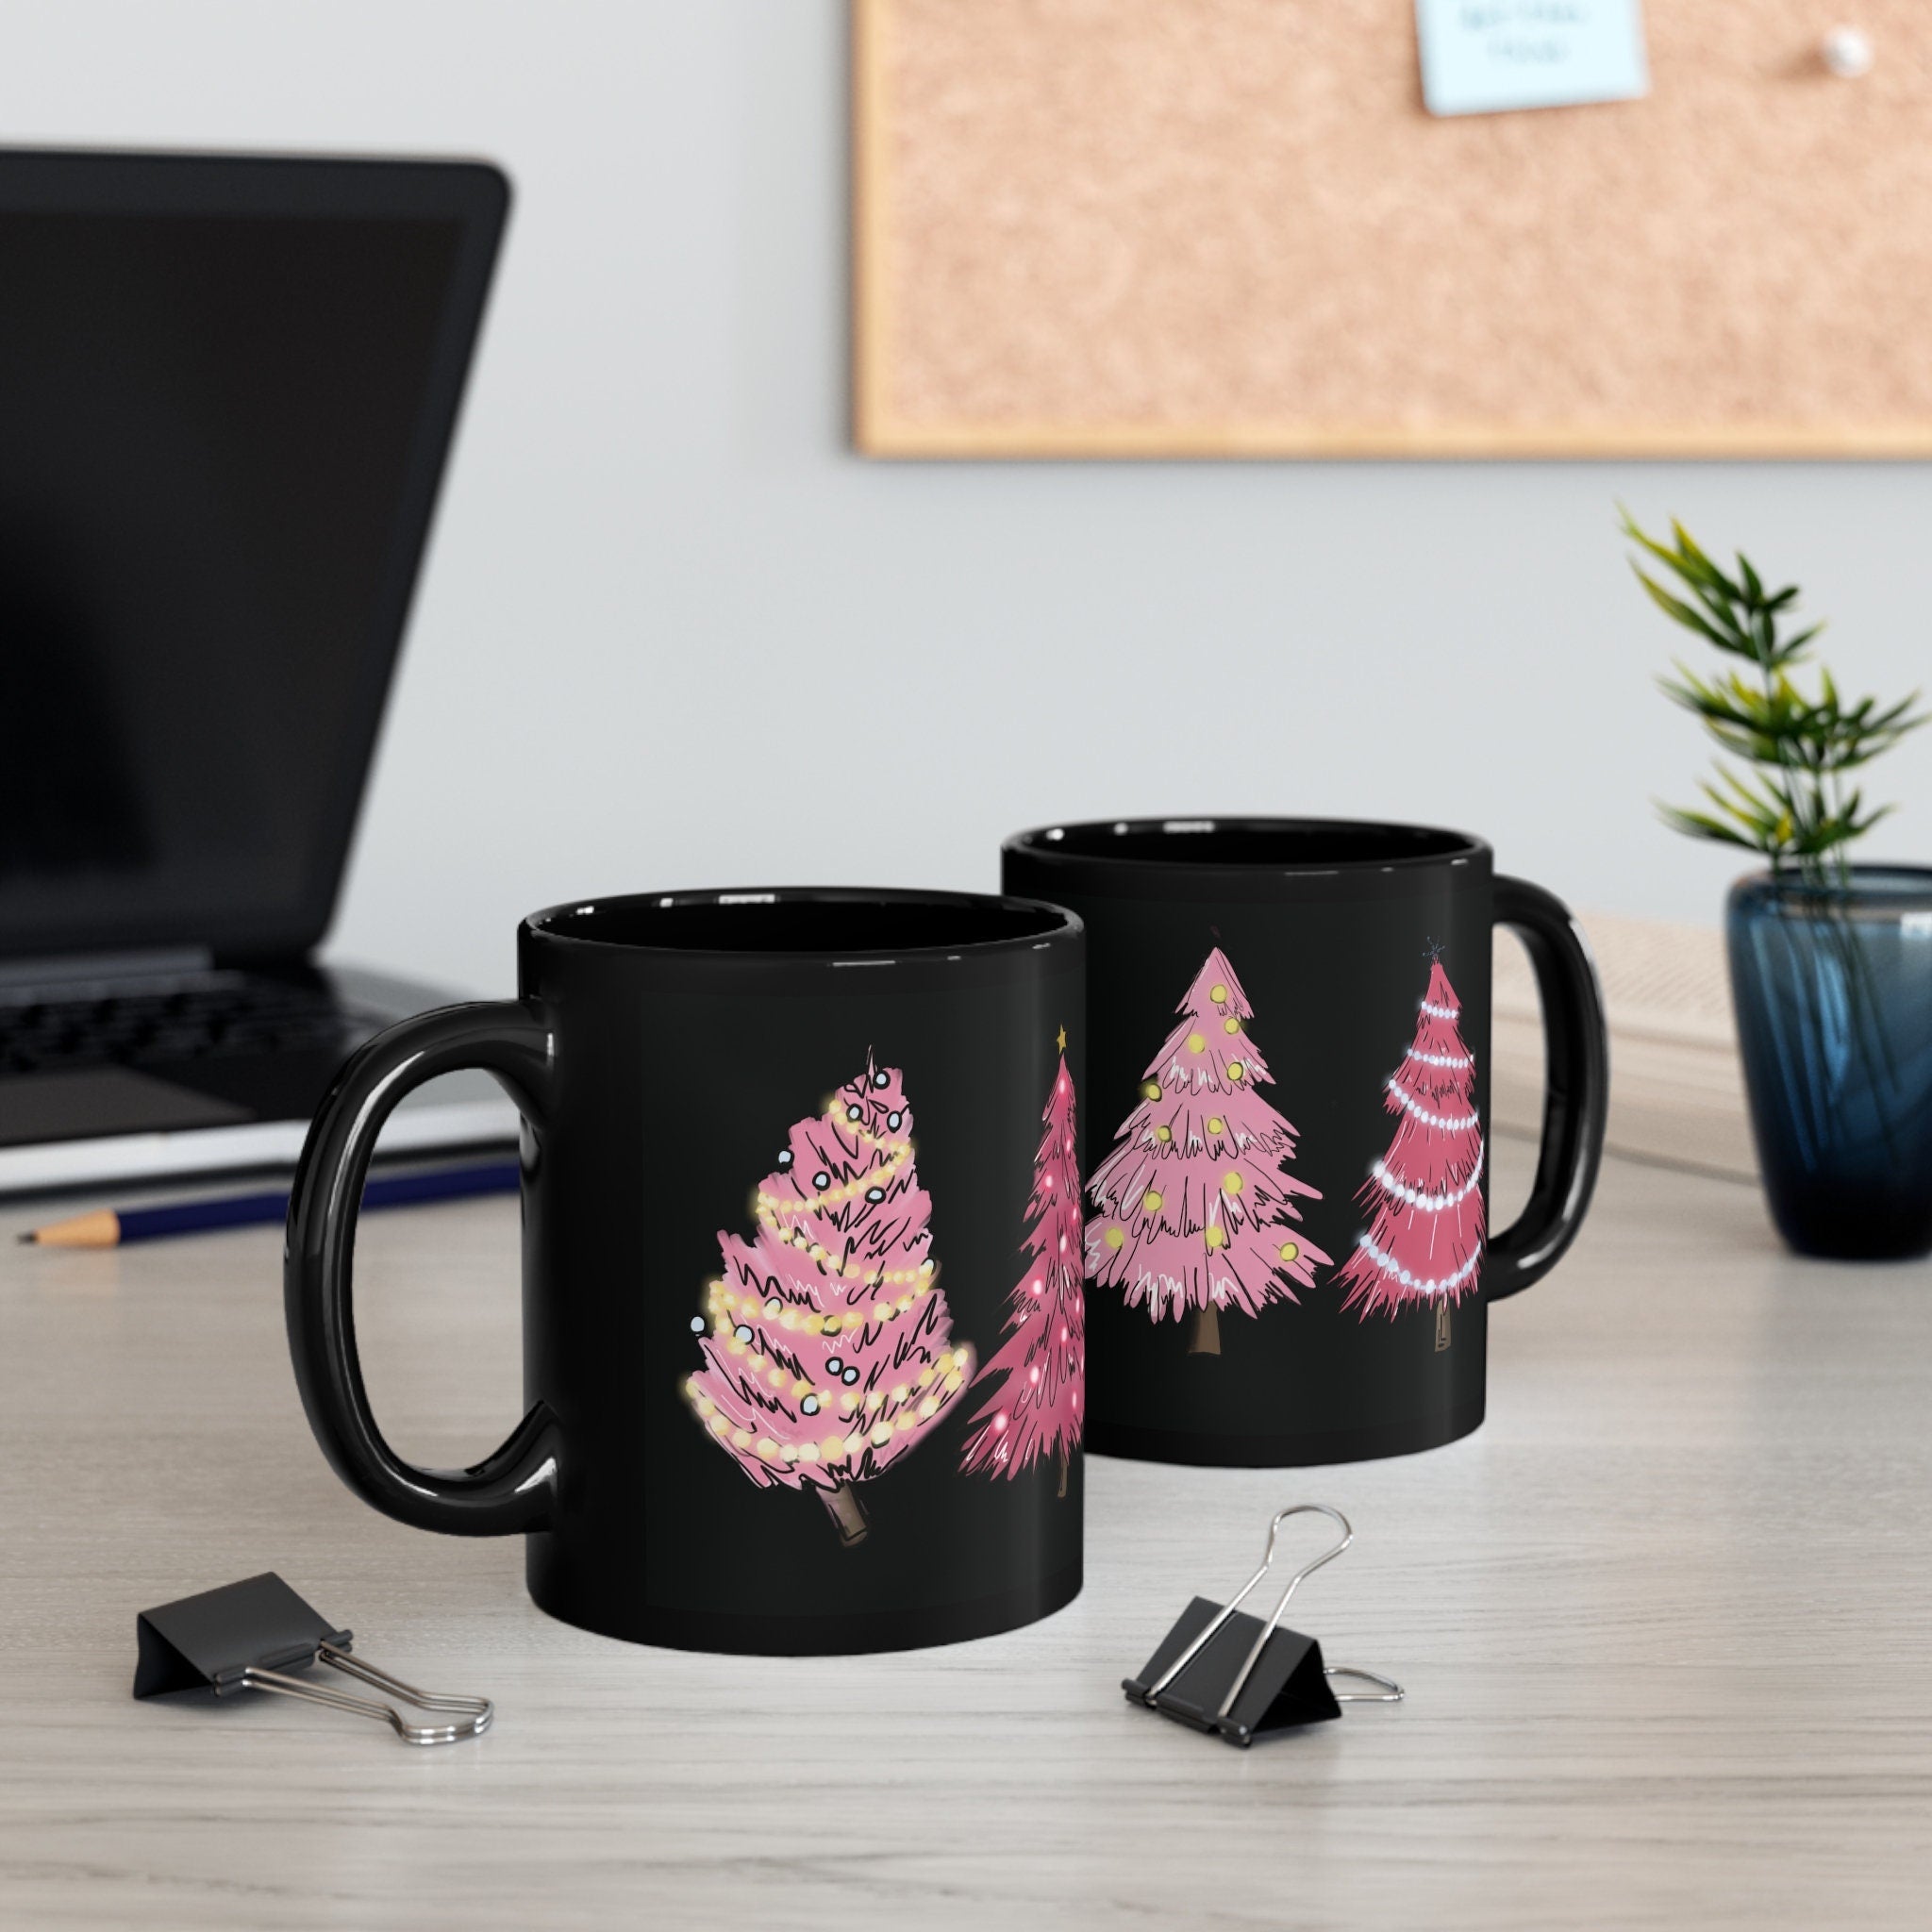 Pink Christmas Trees Coffee Mug 11oz | Black Exterior | Festive Holiday Cup | Unique Christmas Gift